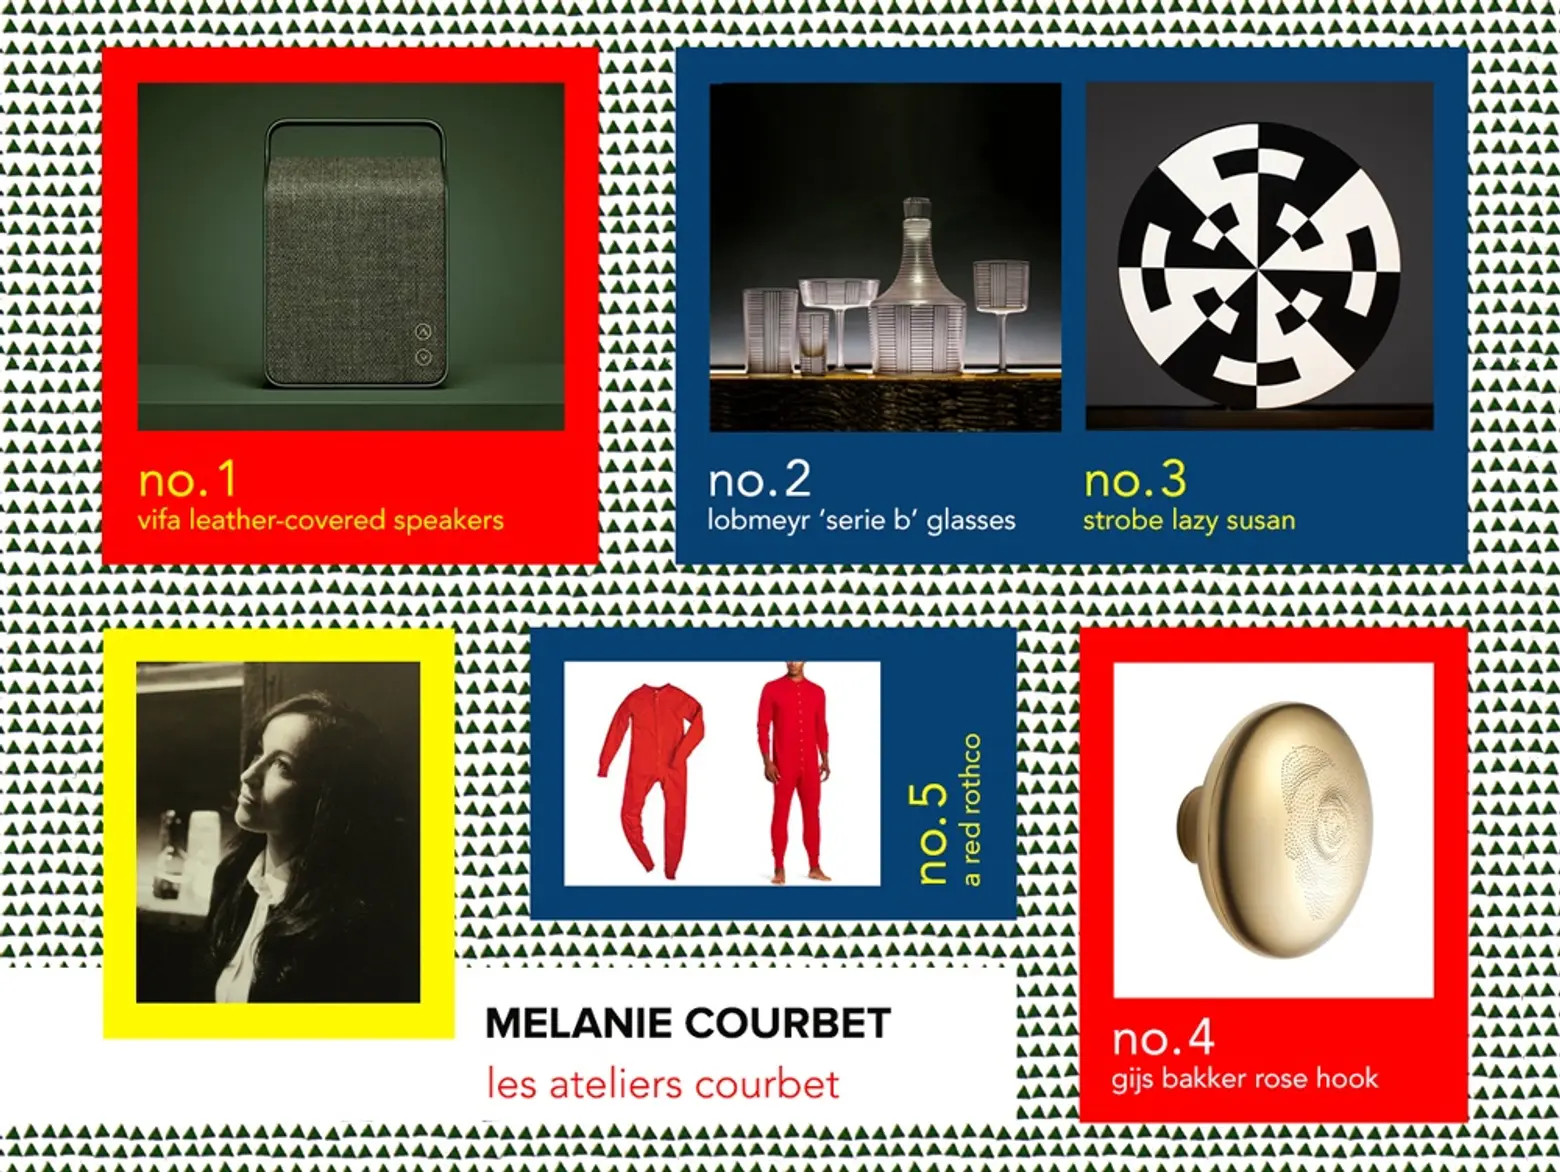 6sqft designer gif guide, Melanie Courbet, Founder of Les Ateliers Courbet